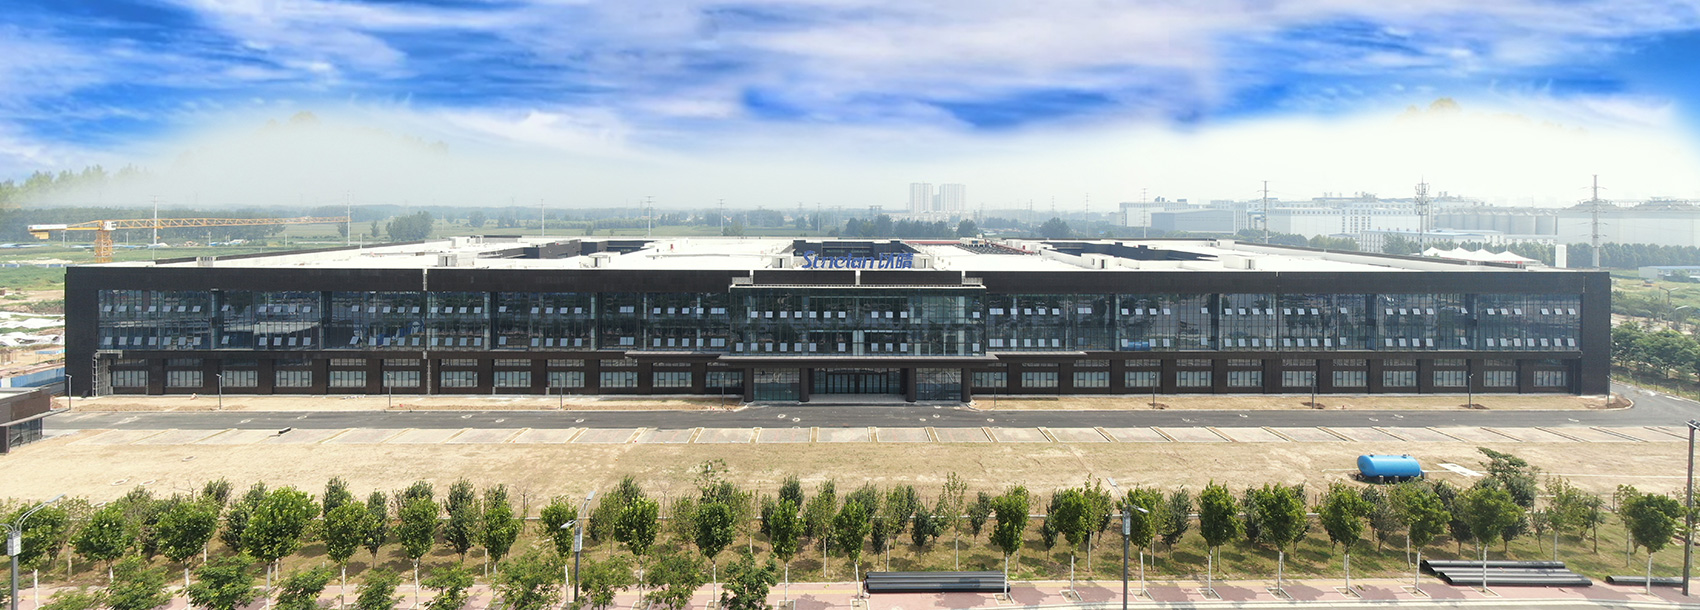 Henan Shangqiu Jimei Digital intelligencei Industrial Park